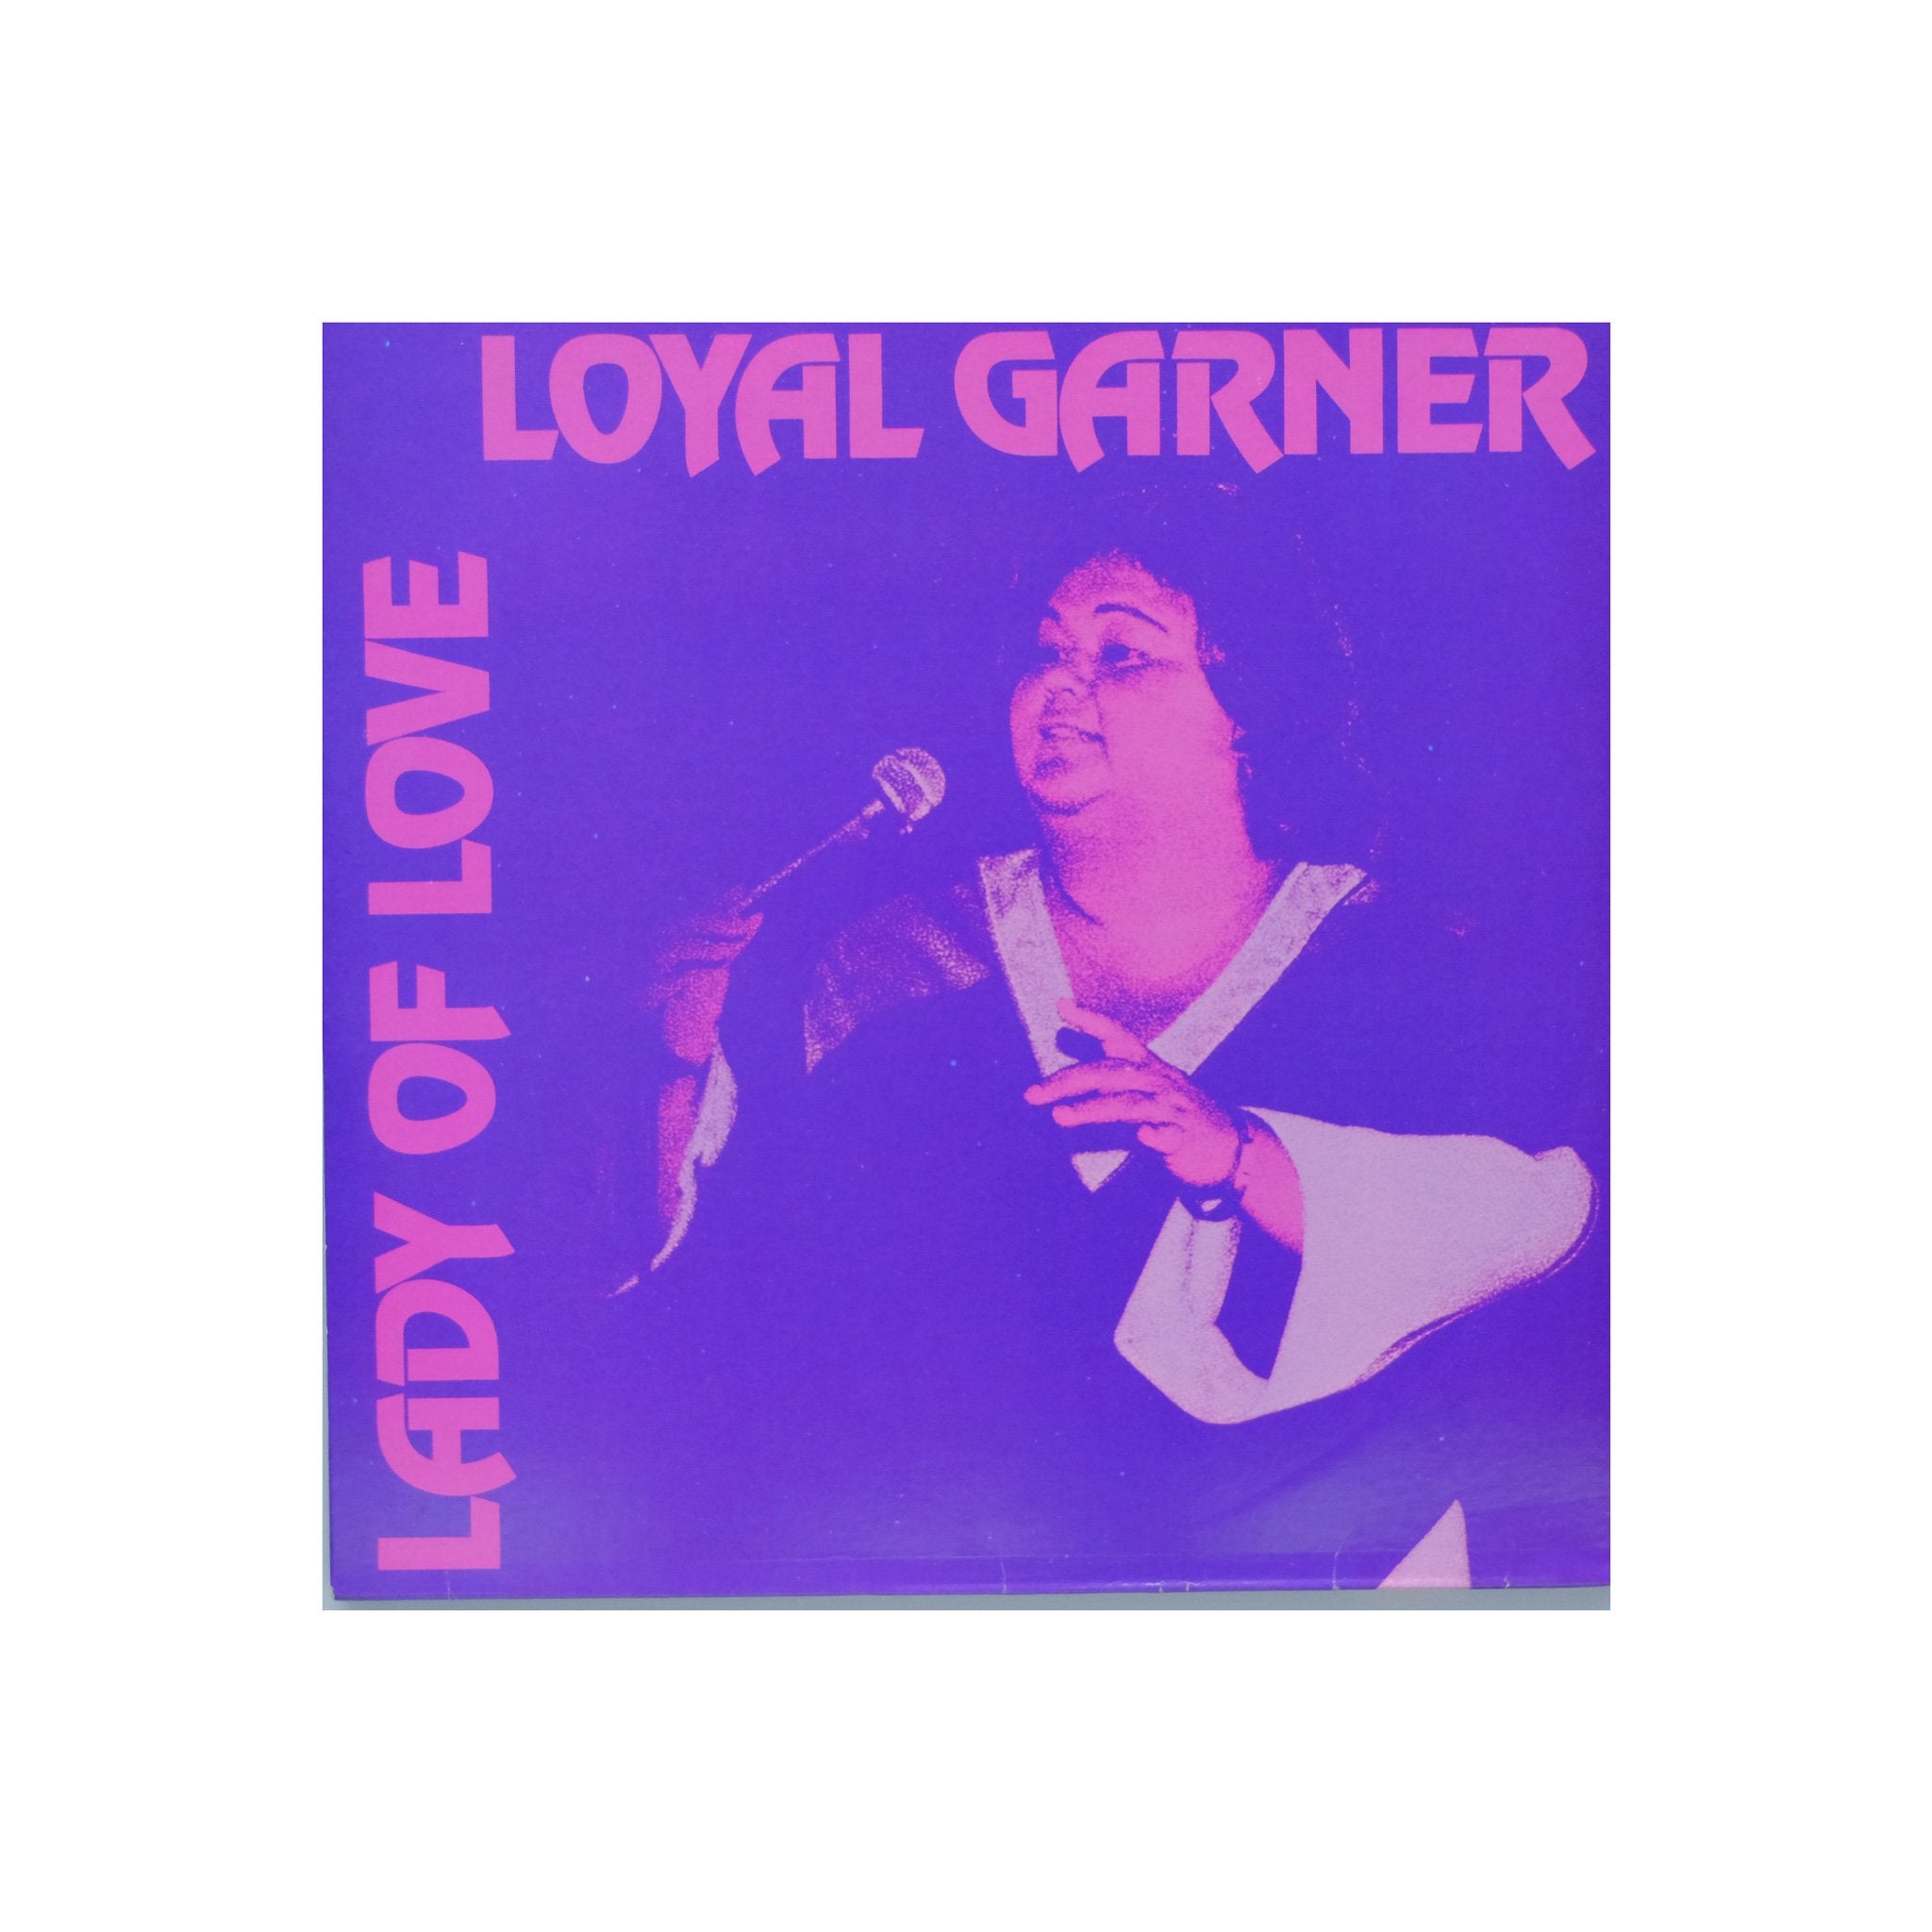 Loyal Garner - Loyal Garner [sealed]